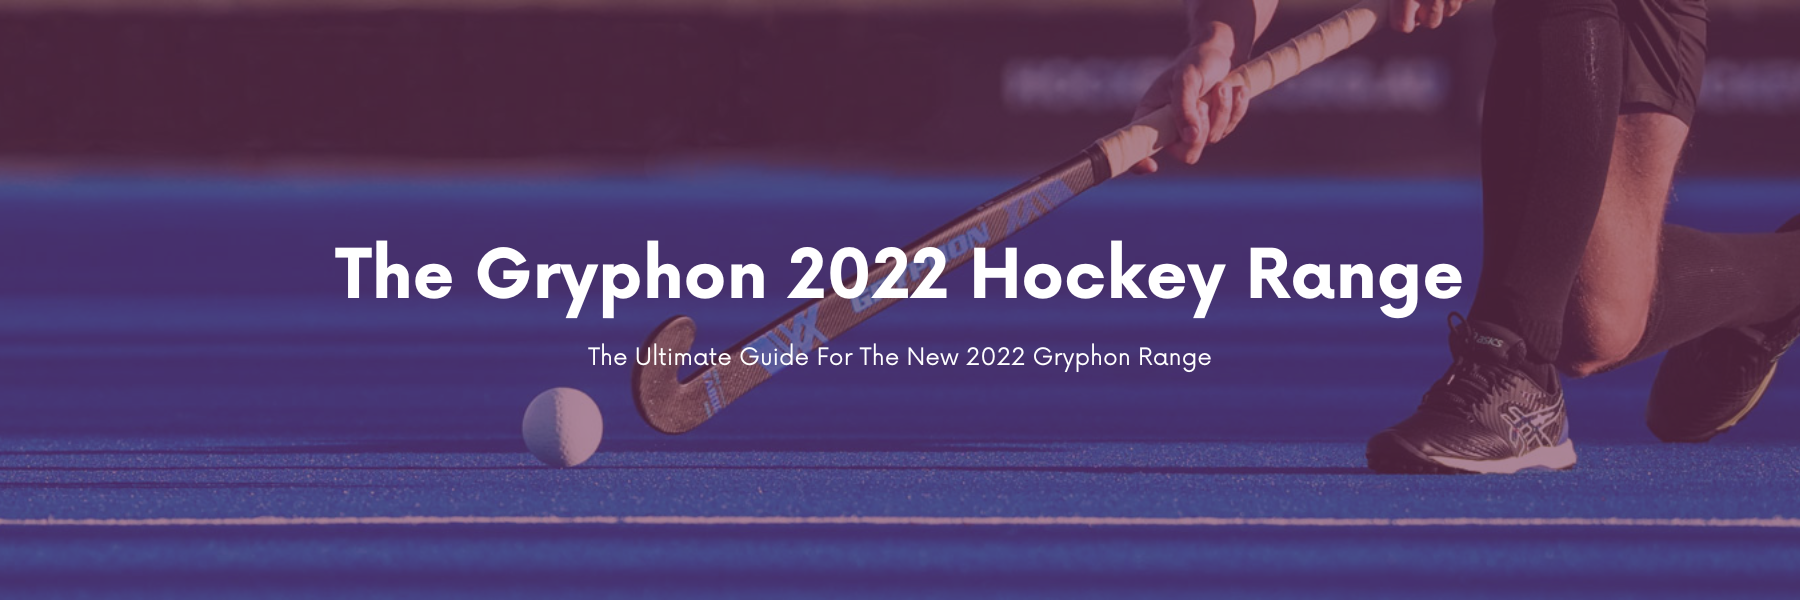 The Gryphon 2022 Range